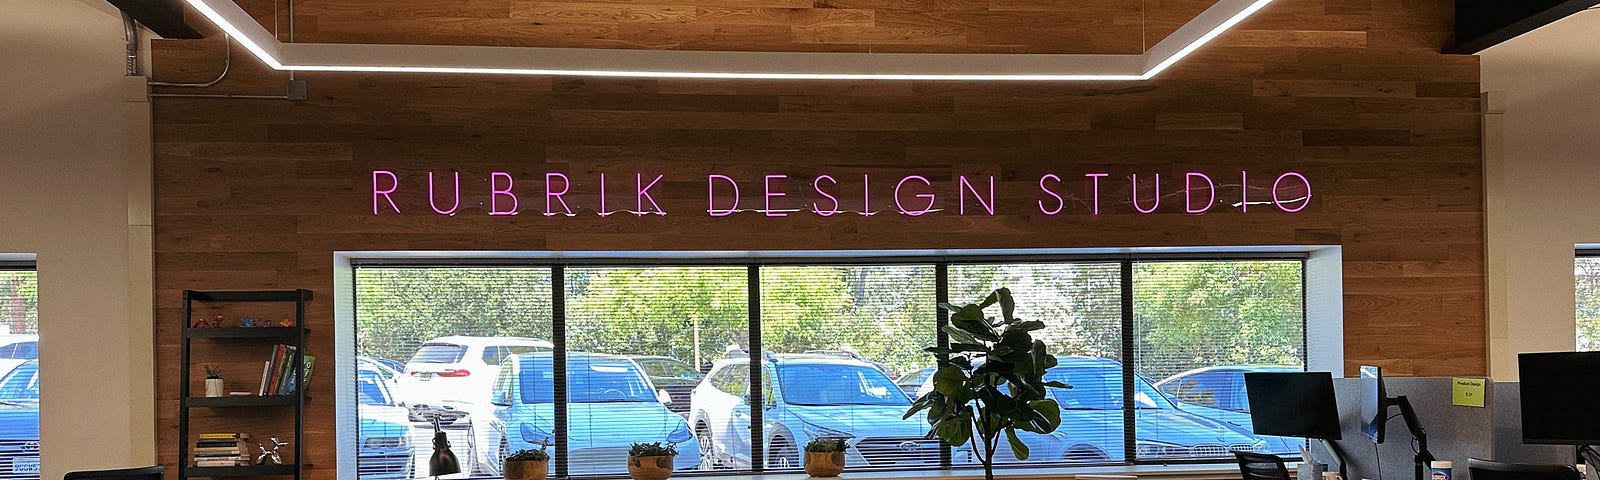 Rubrik Design Studio, the product design area in the office